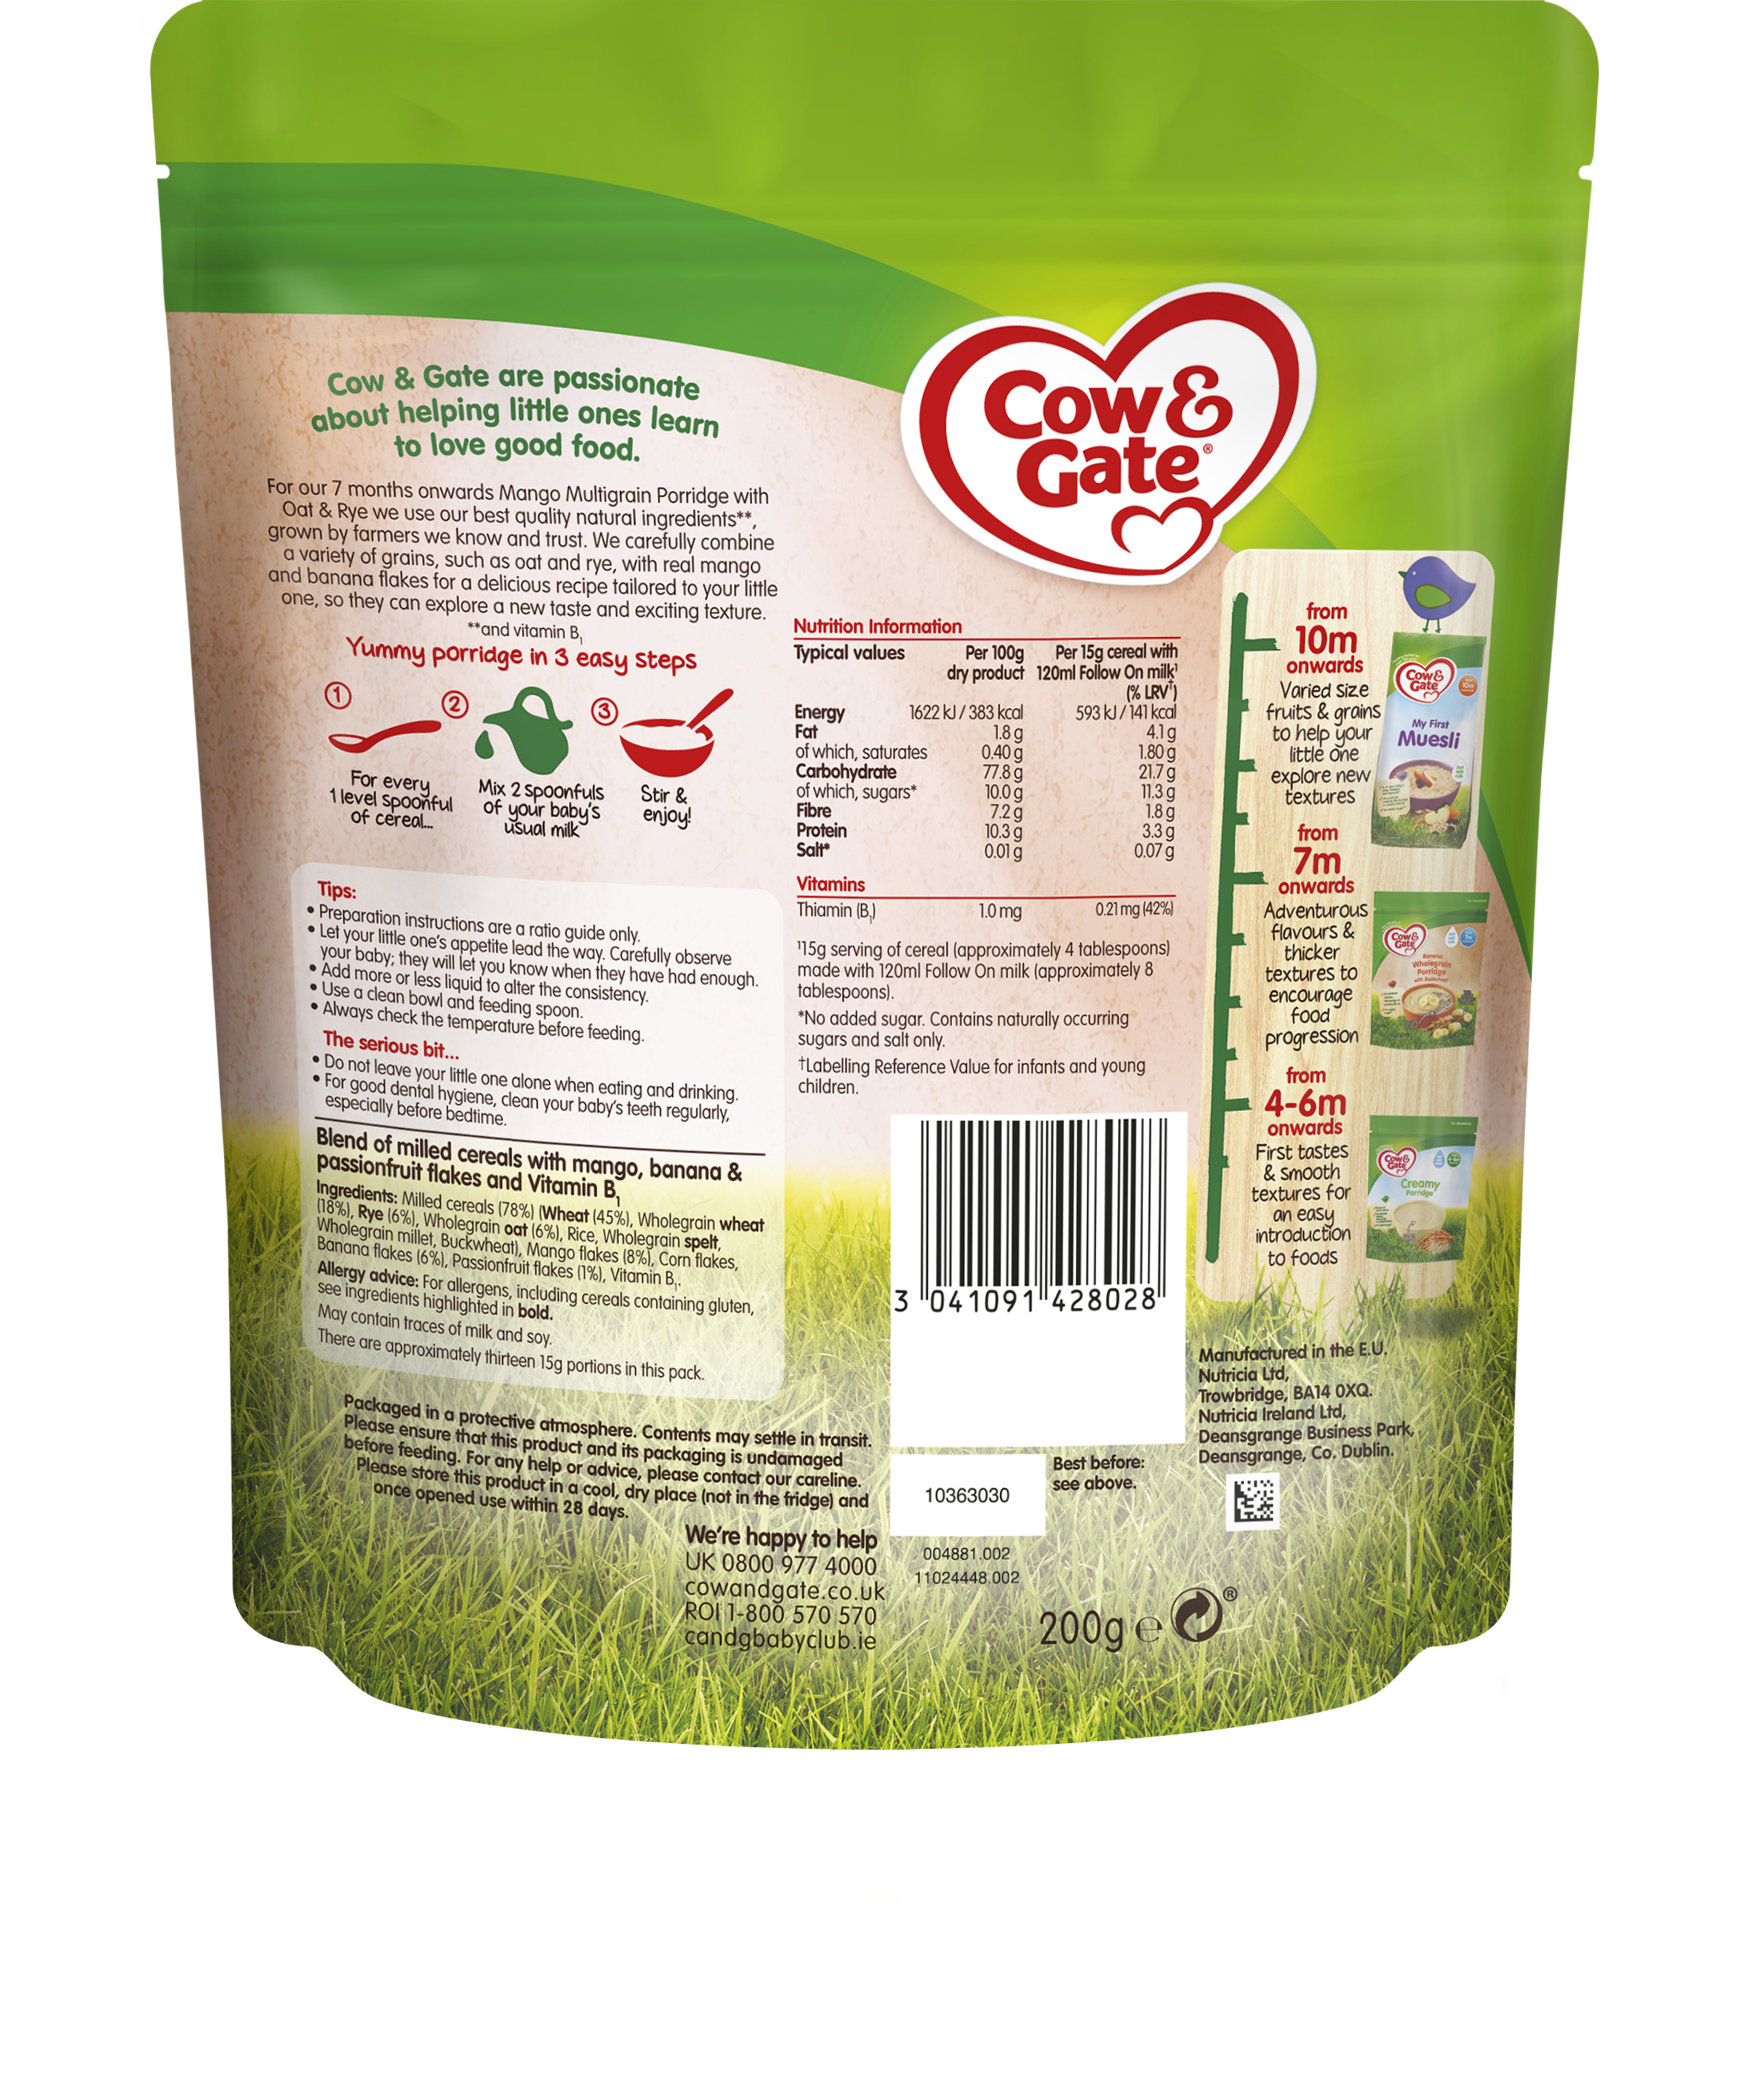 Cow & Gate Mango Multigrain Porridge with Oat and Rye 200g 